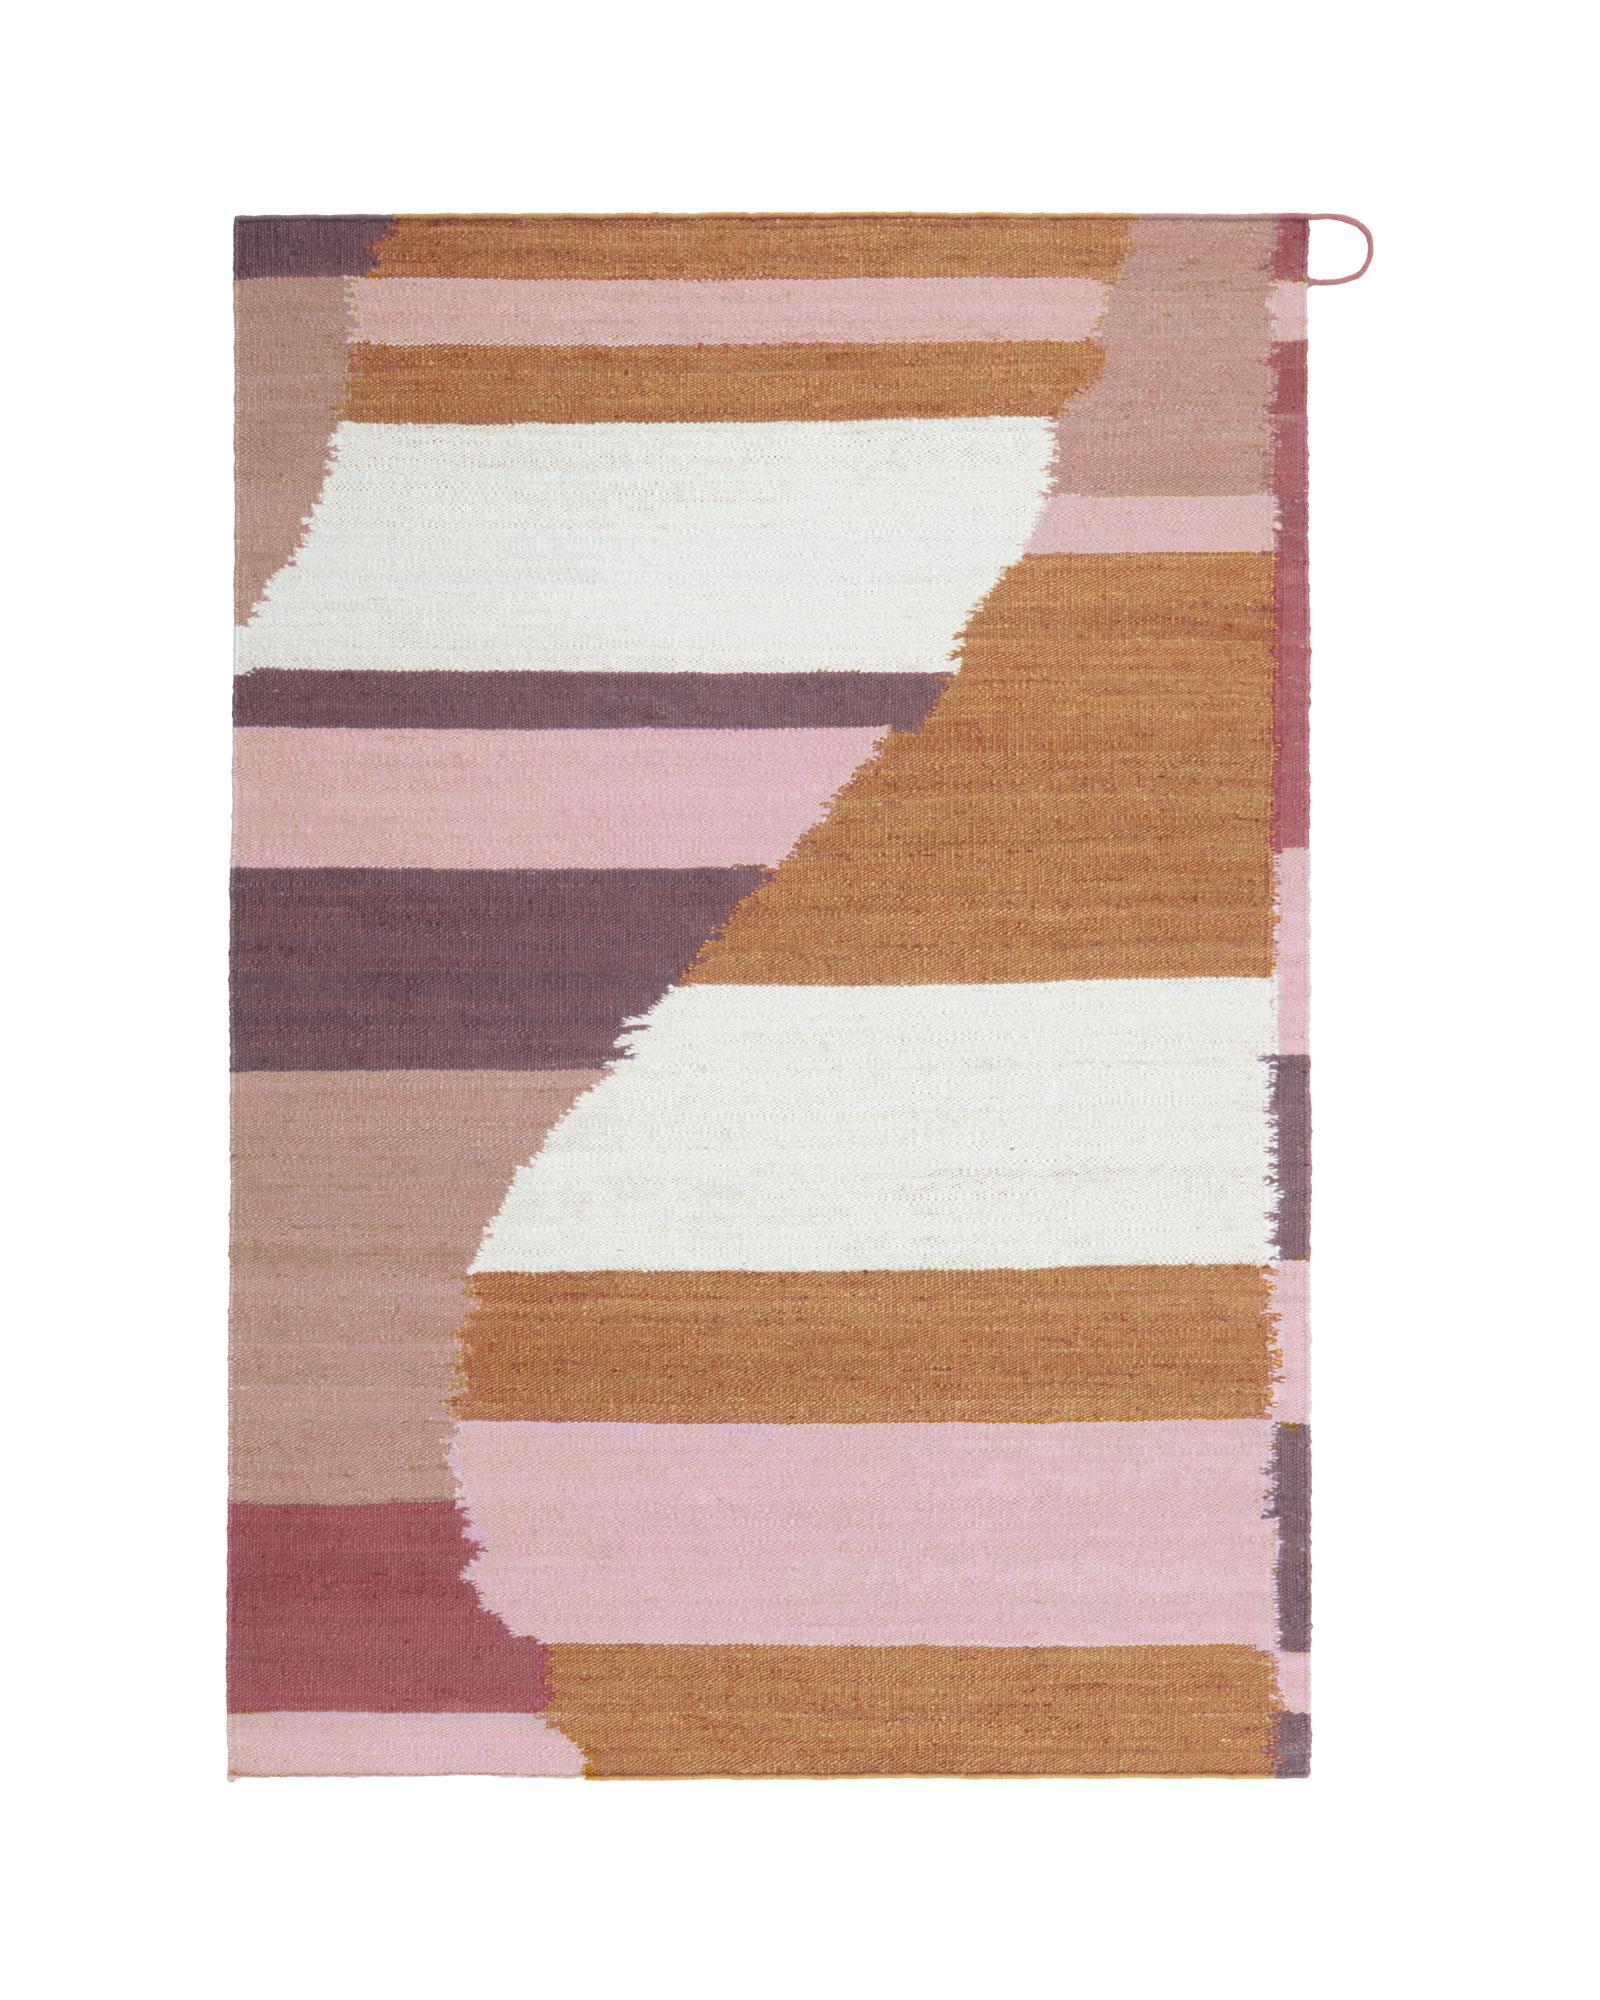 cc-tapis ONDA ONDA SIESTA  handmade rug by Charles-Antoine Chappuis For Sale 1